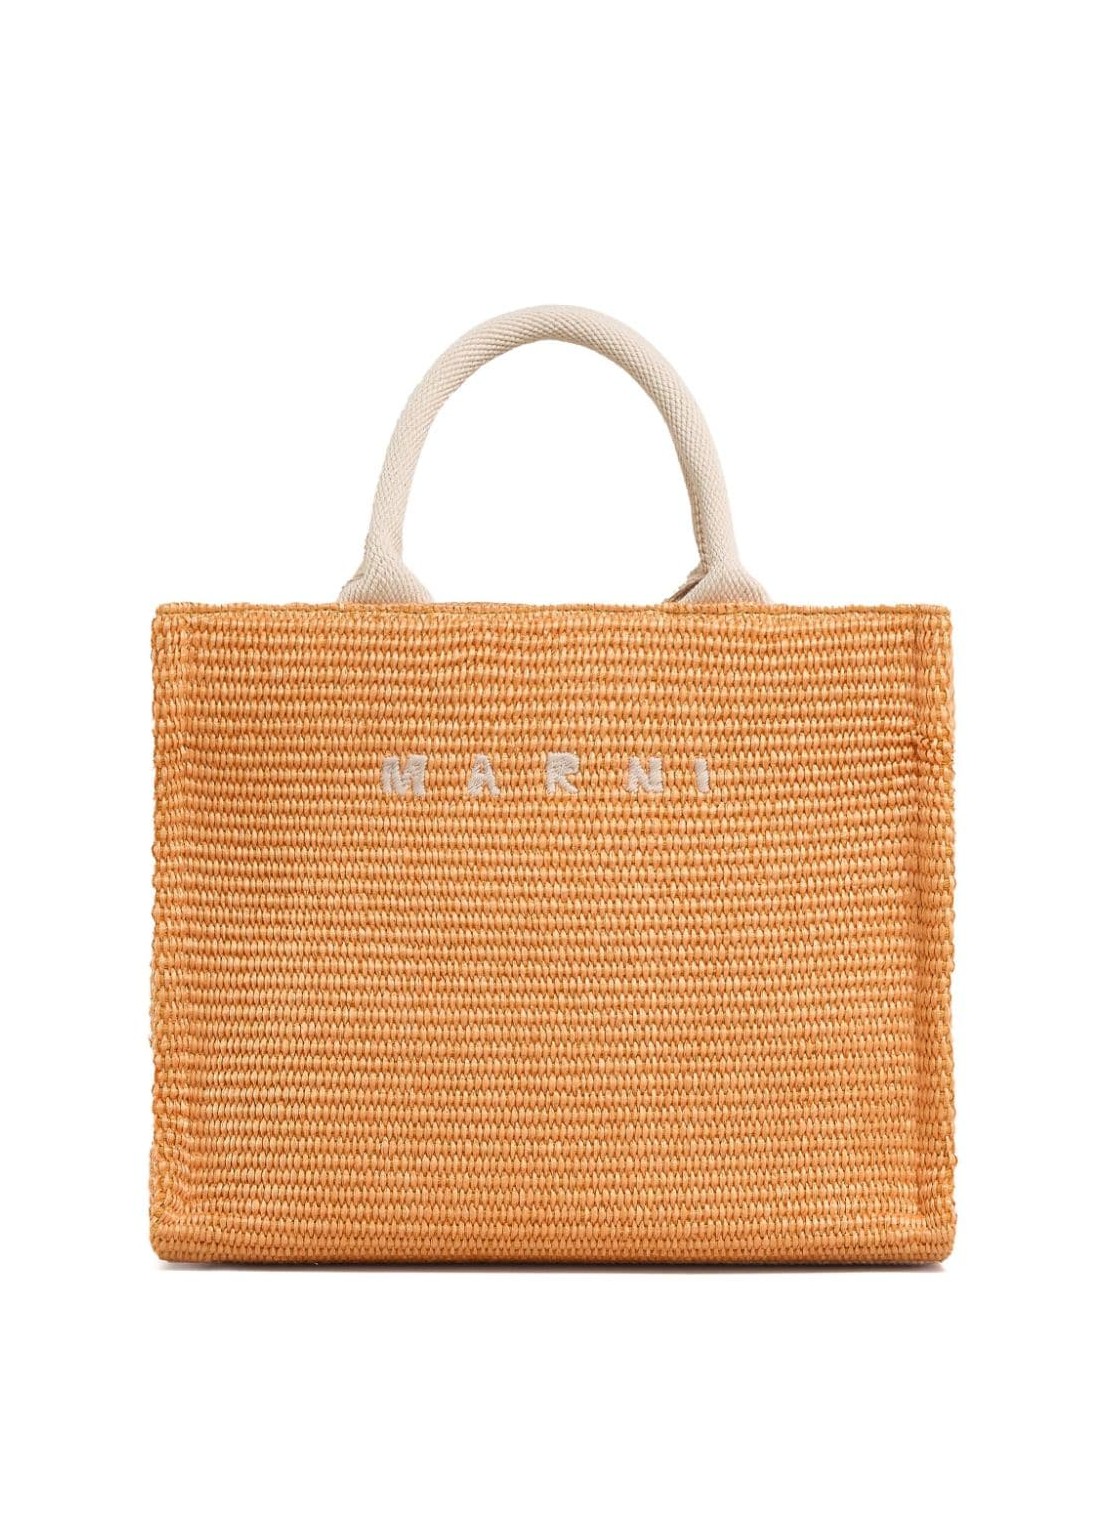 Handbag marni handbag woman small basket shmp0077u0 00r30 talla naranja
 